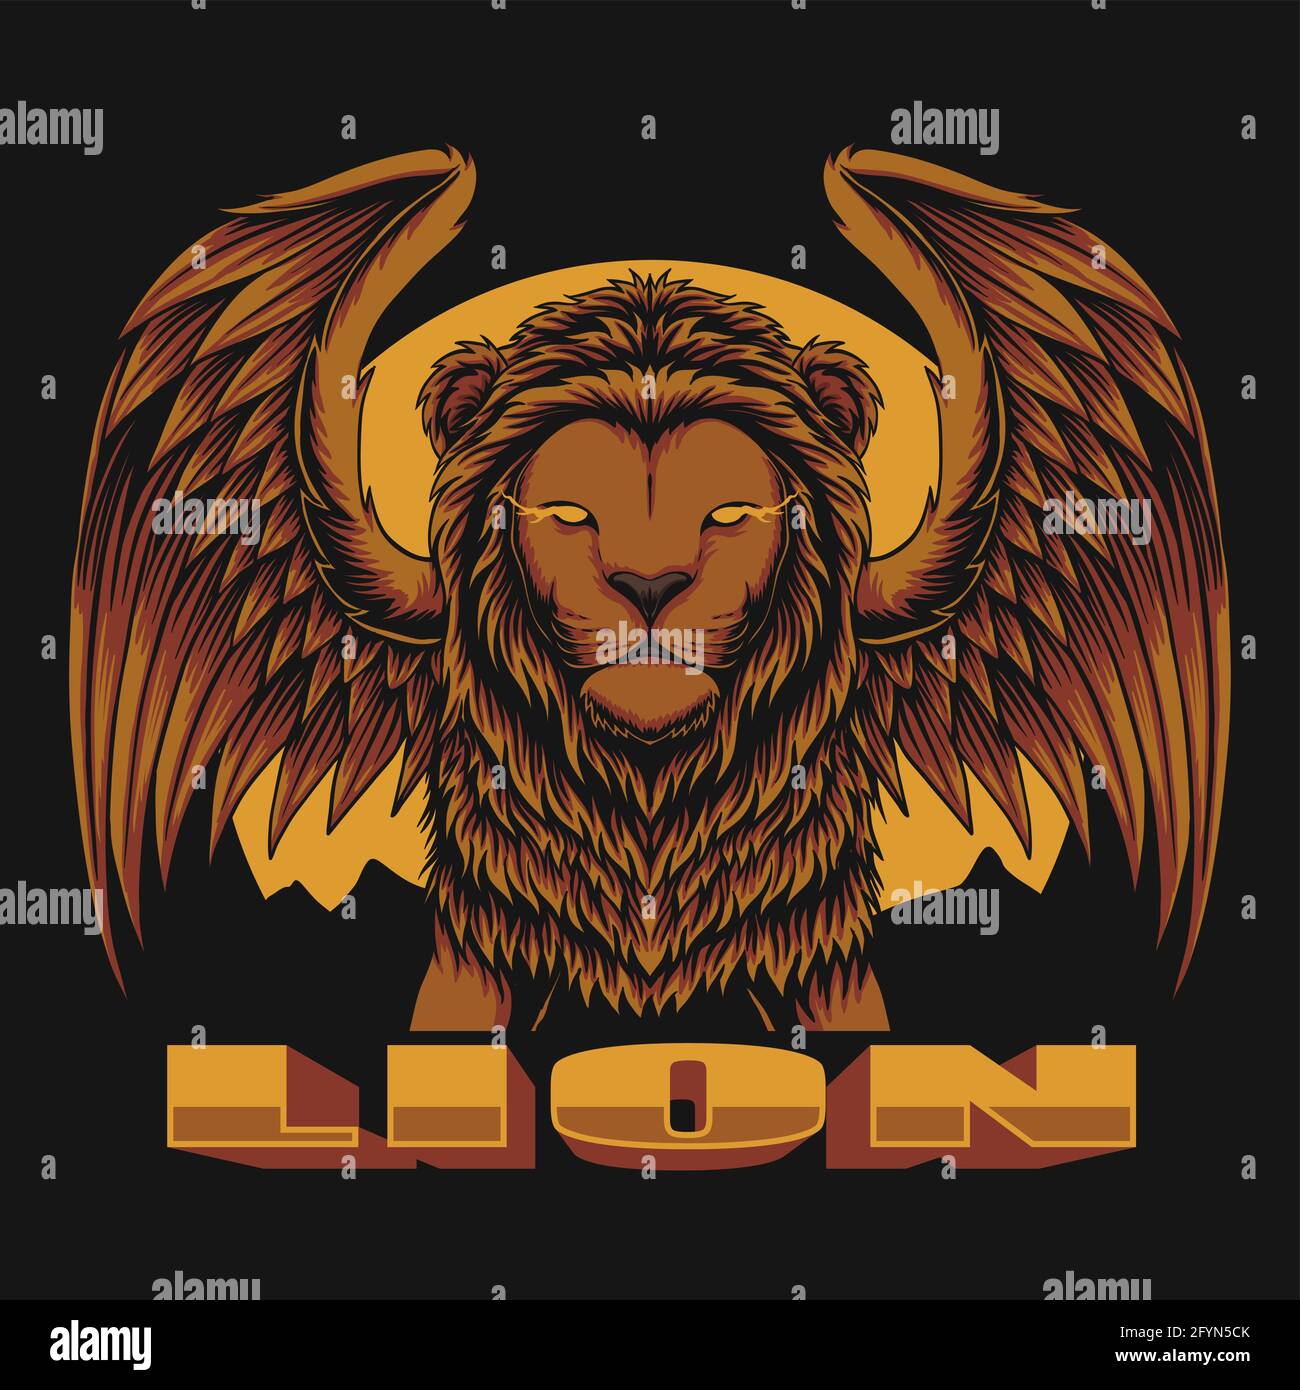 Lion wing vector illustration Stock Vector